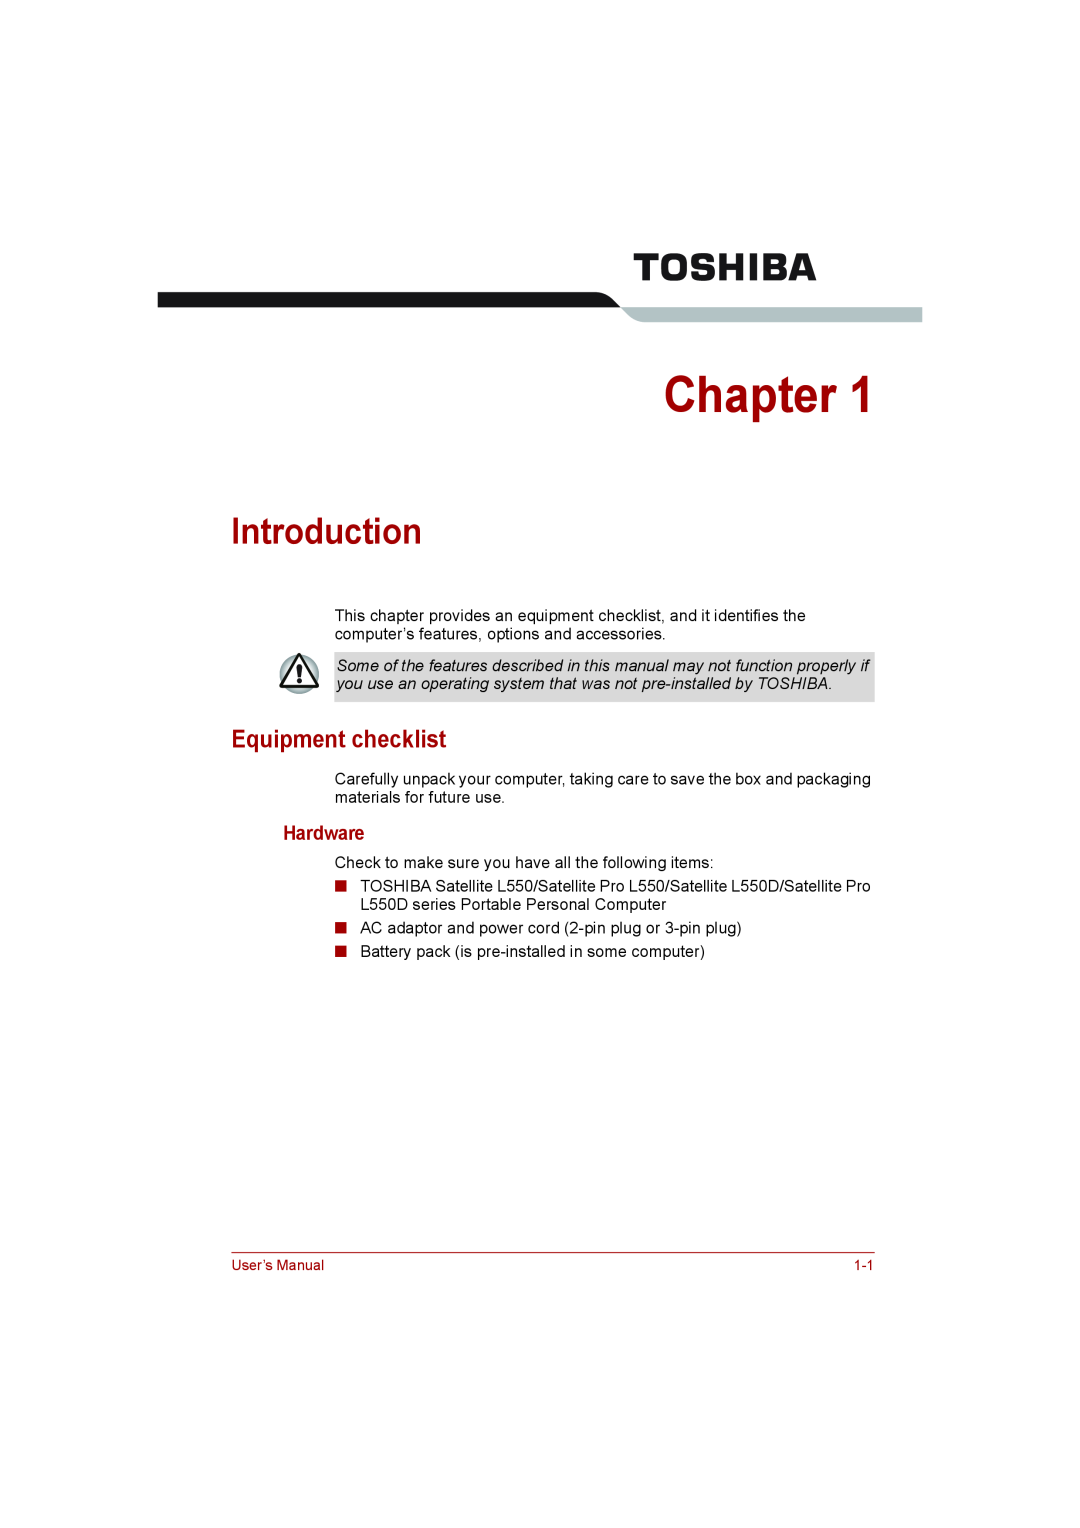 Toshiba toshiba satellite l550/ satellite pro l550/ satellite l550d/ satellite pro l550d series Chapter, Introduction 